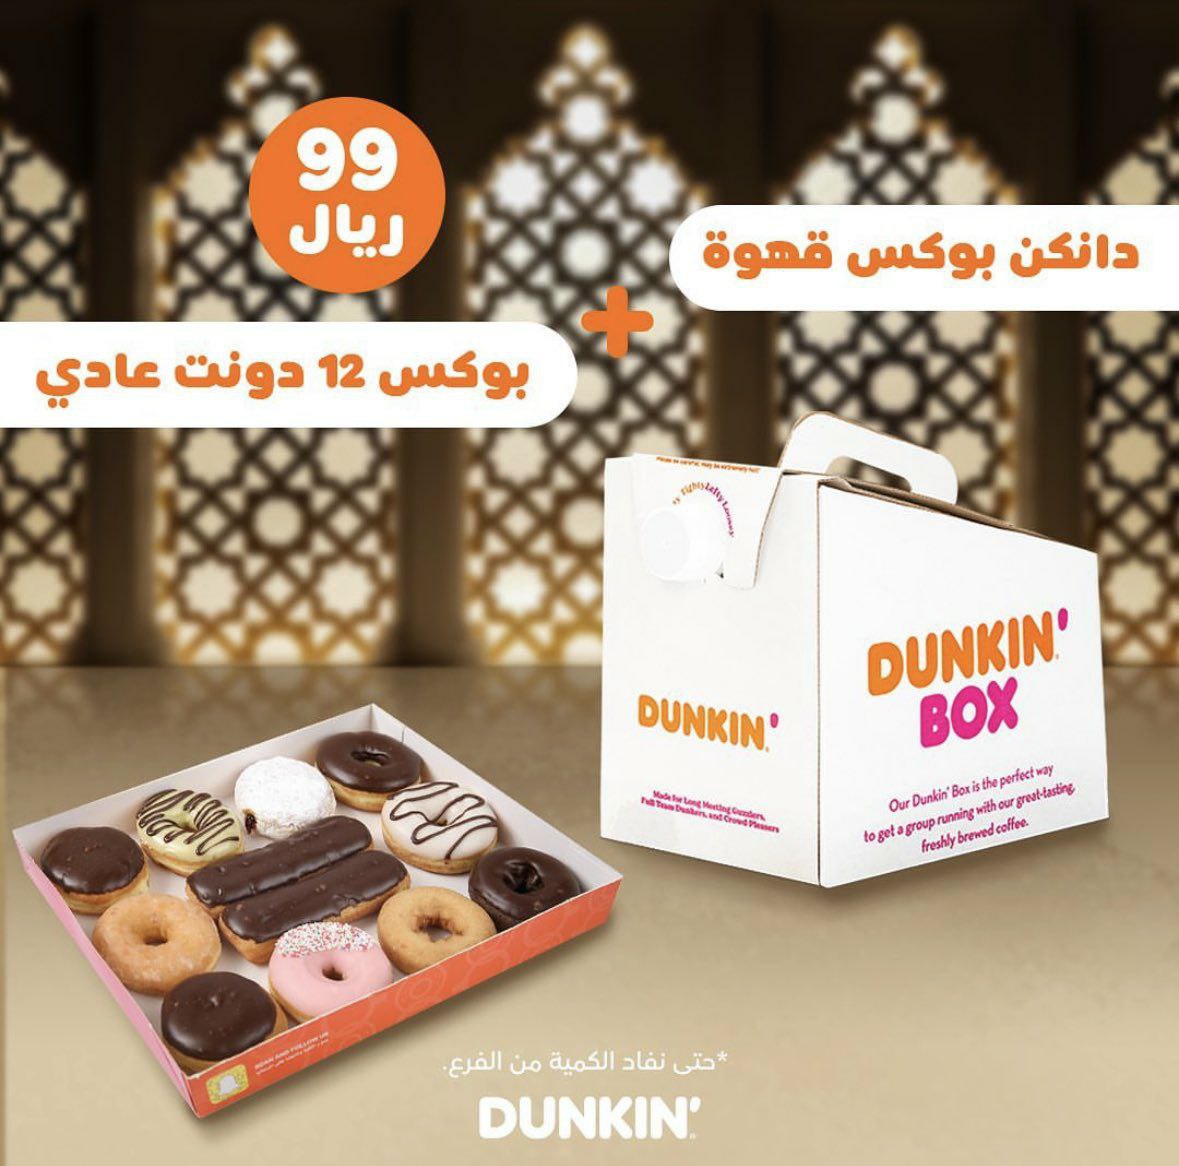 Dunkin box coffee and regular donut